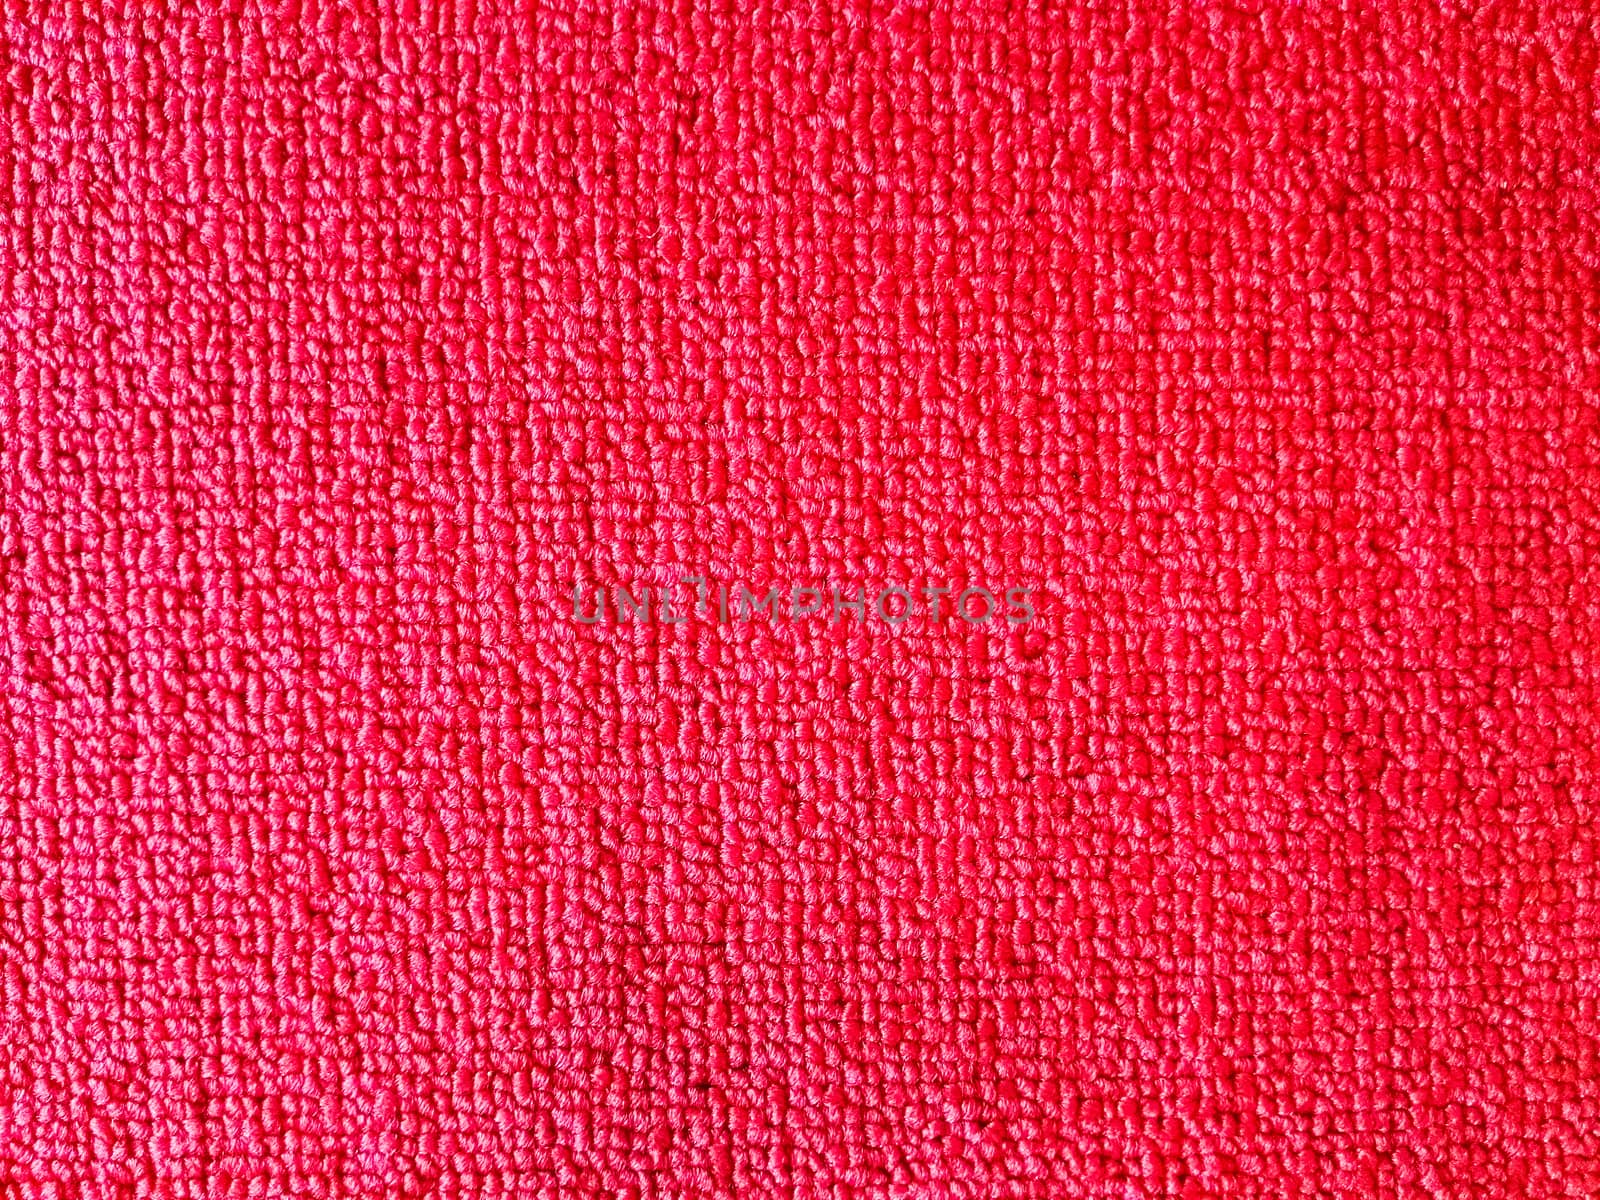 Red carpet by wattanaphob